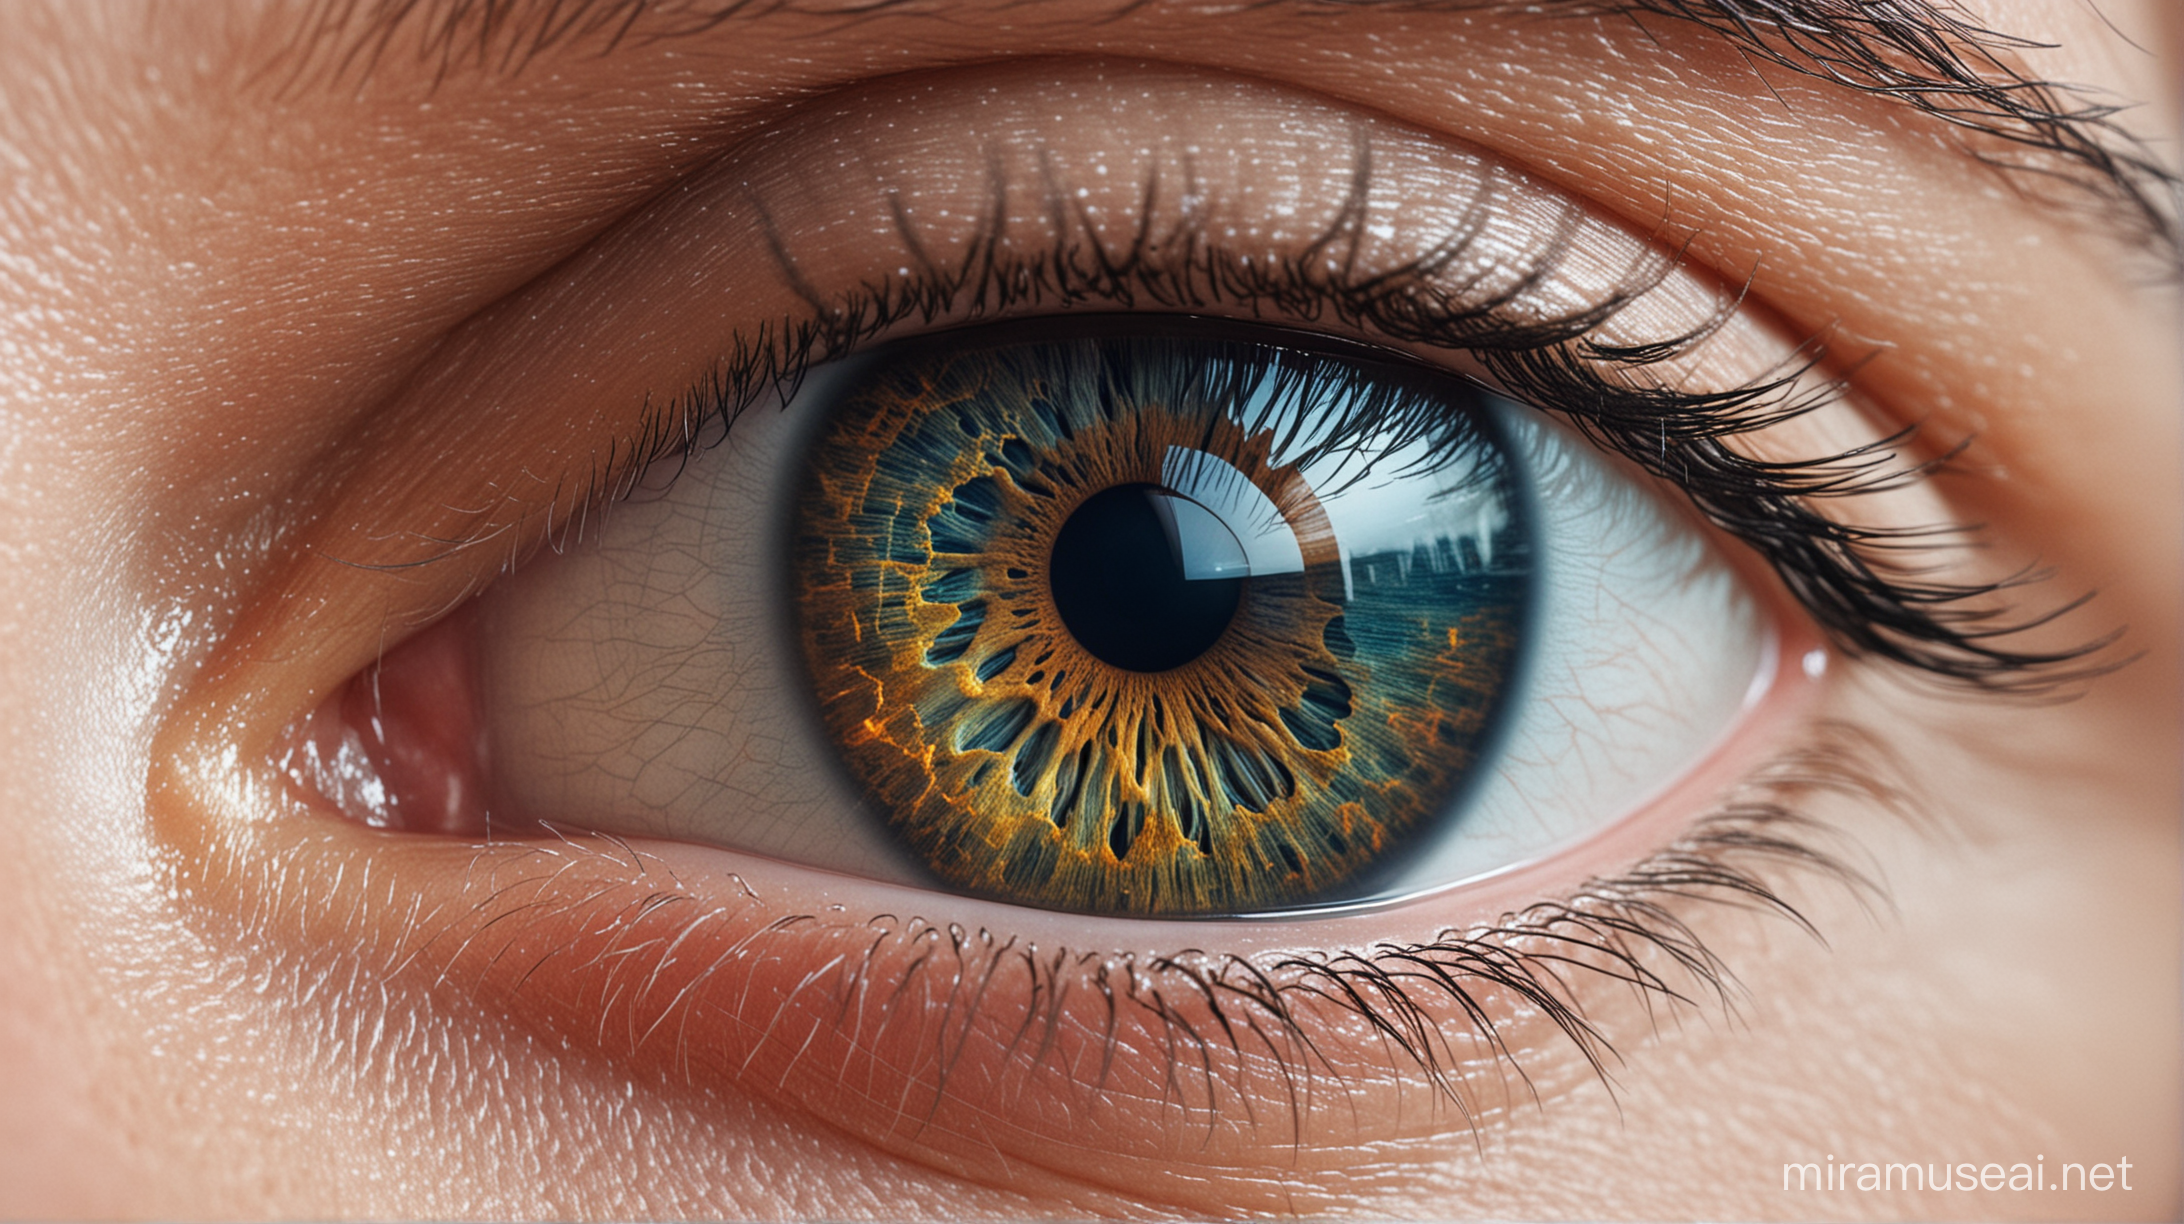 Futuristic Digital Eye Concept Art